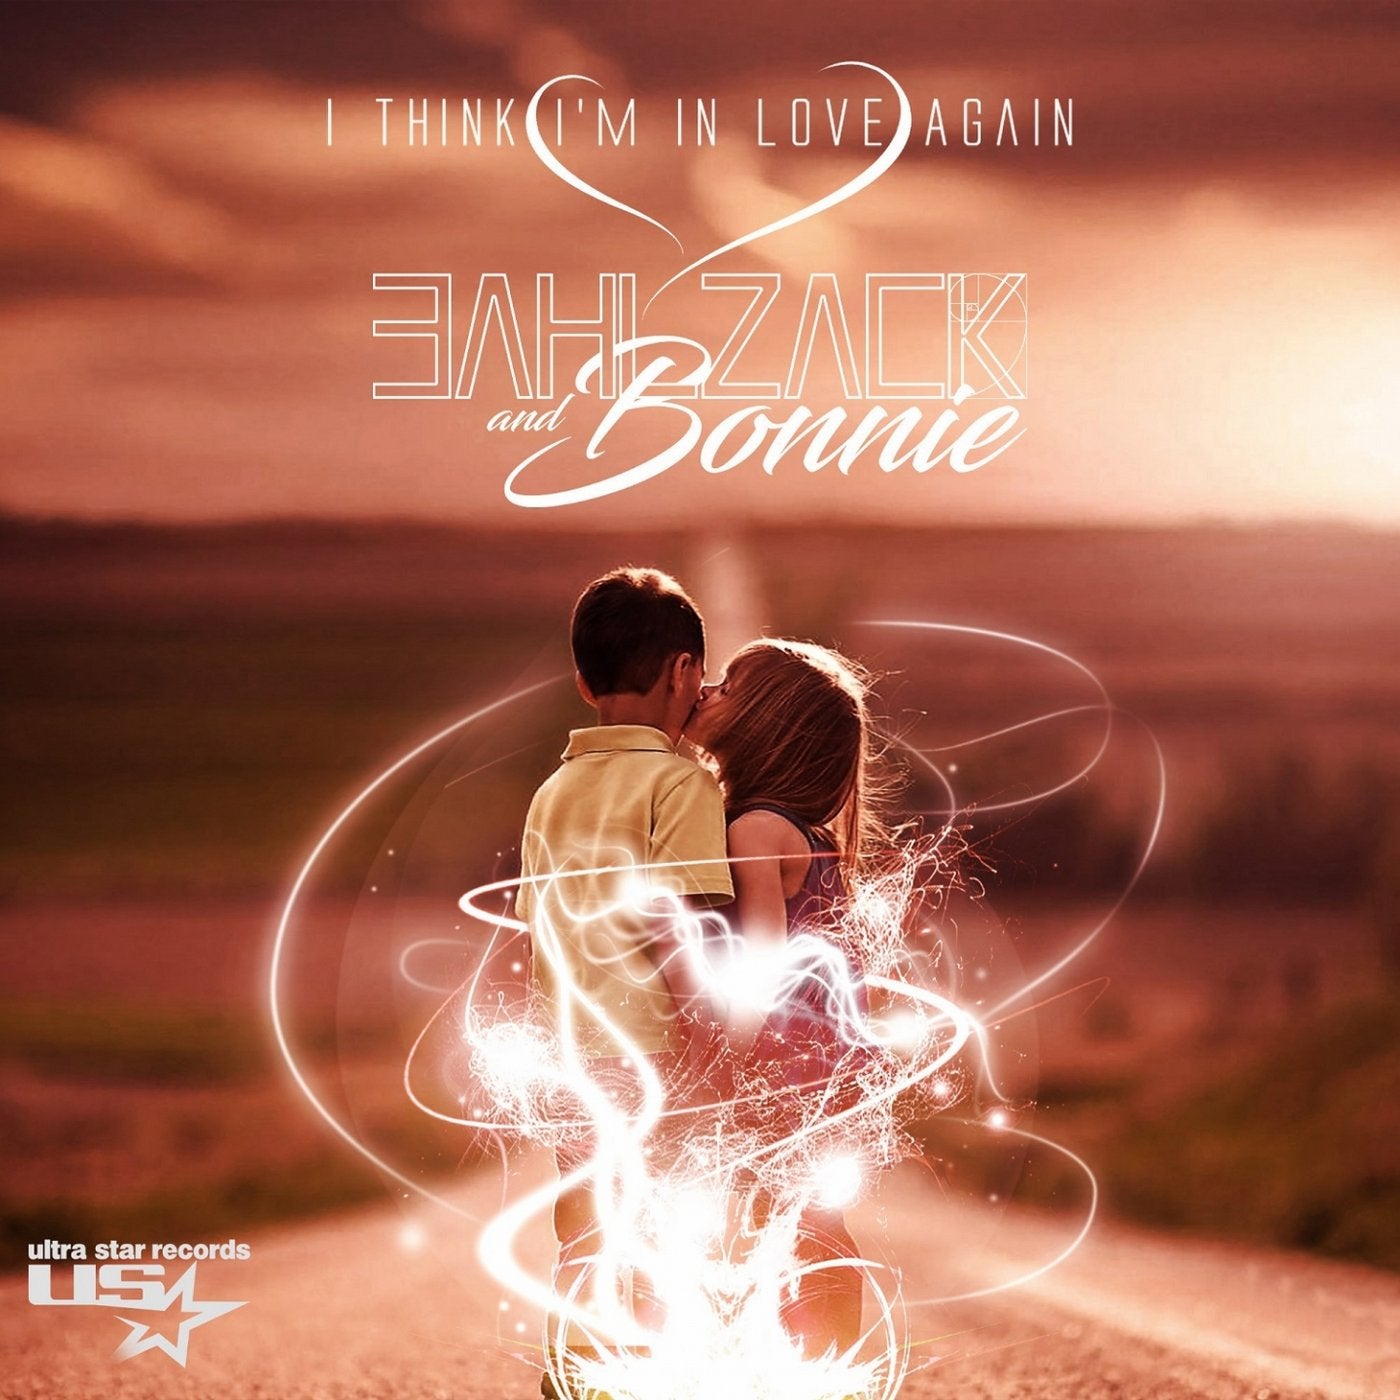 I Think I'm in Love Again (Original Mix) от Bahlzack, Bonnie на Bea...